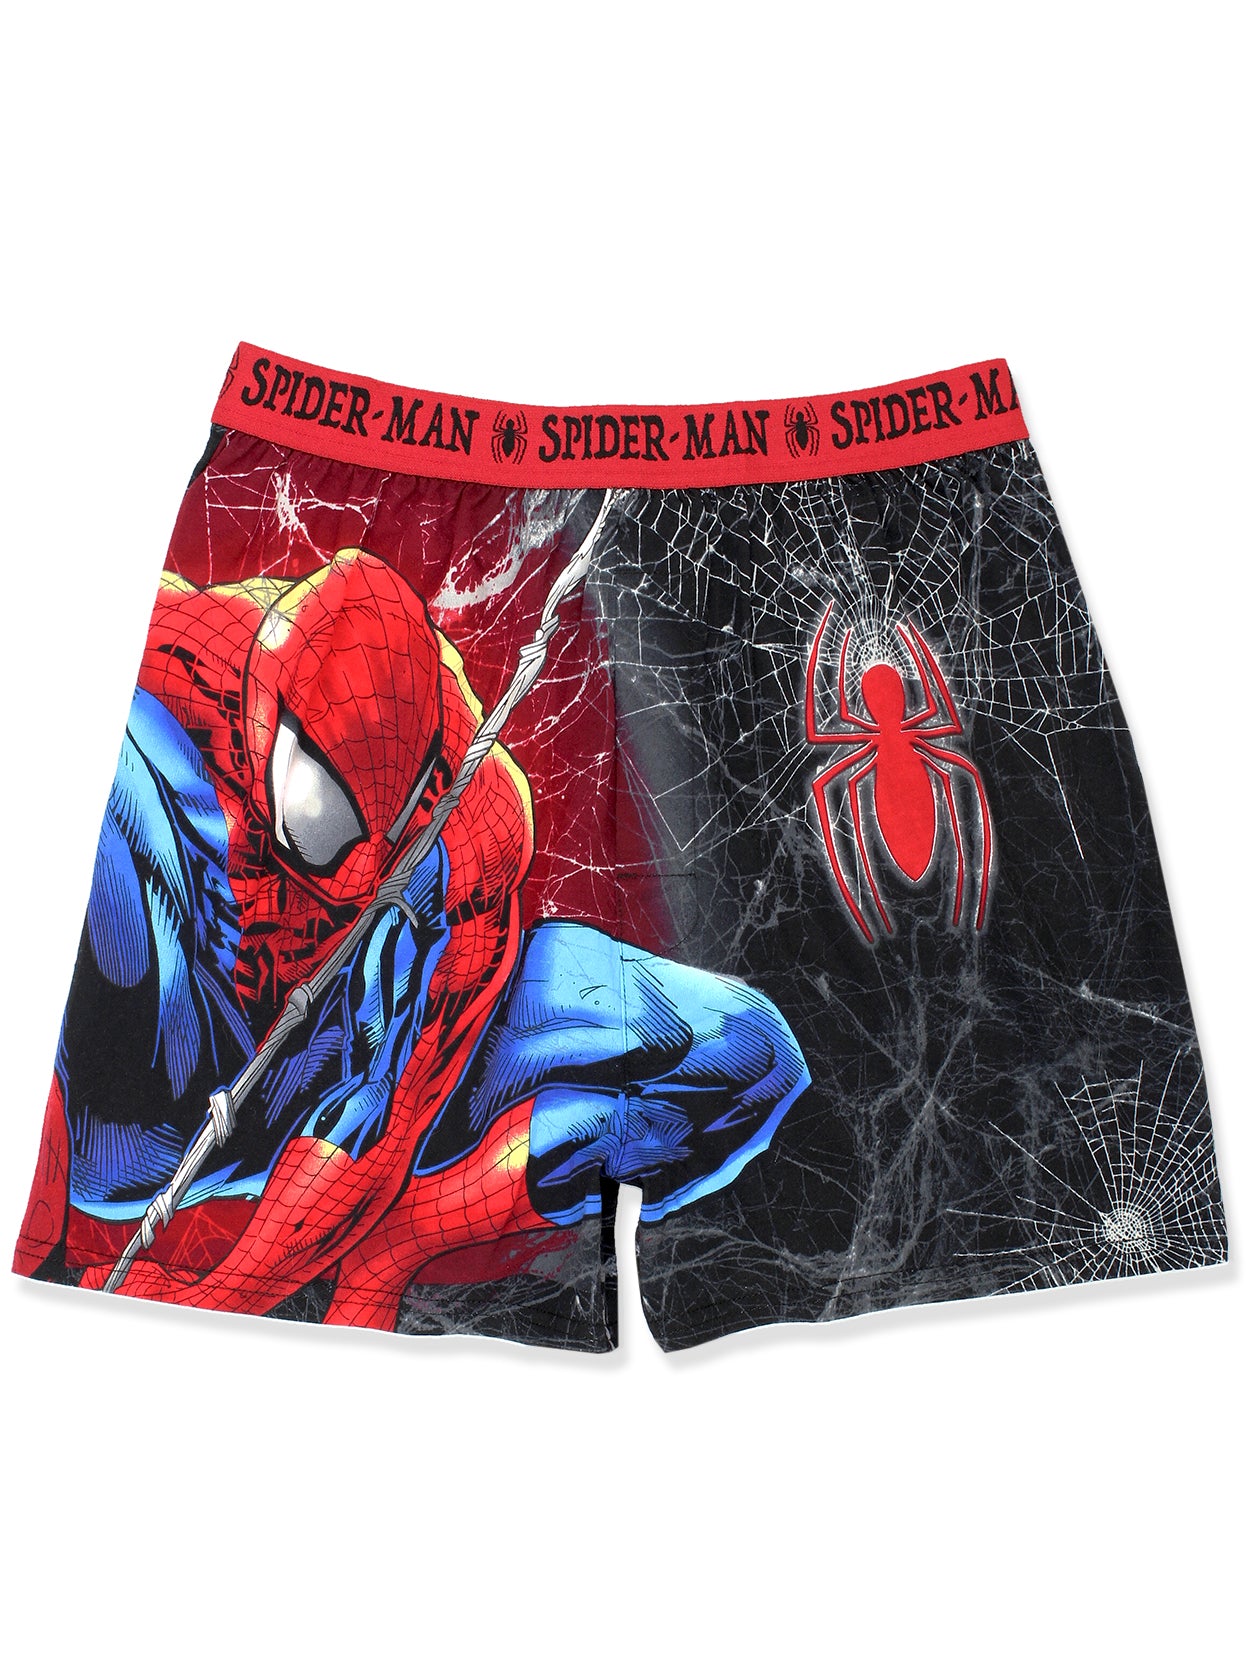 Spider-Man Web Comic Style Boxer Shorts